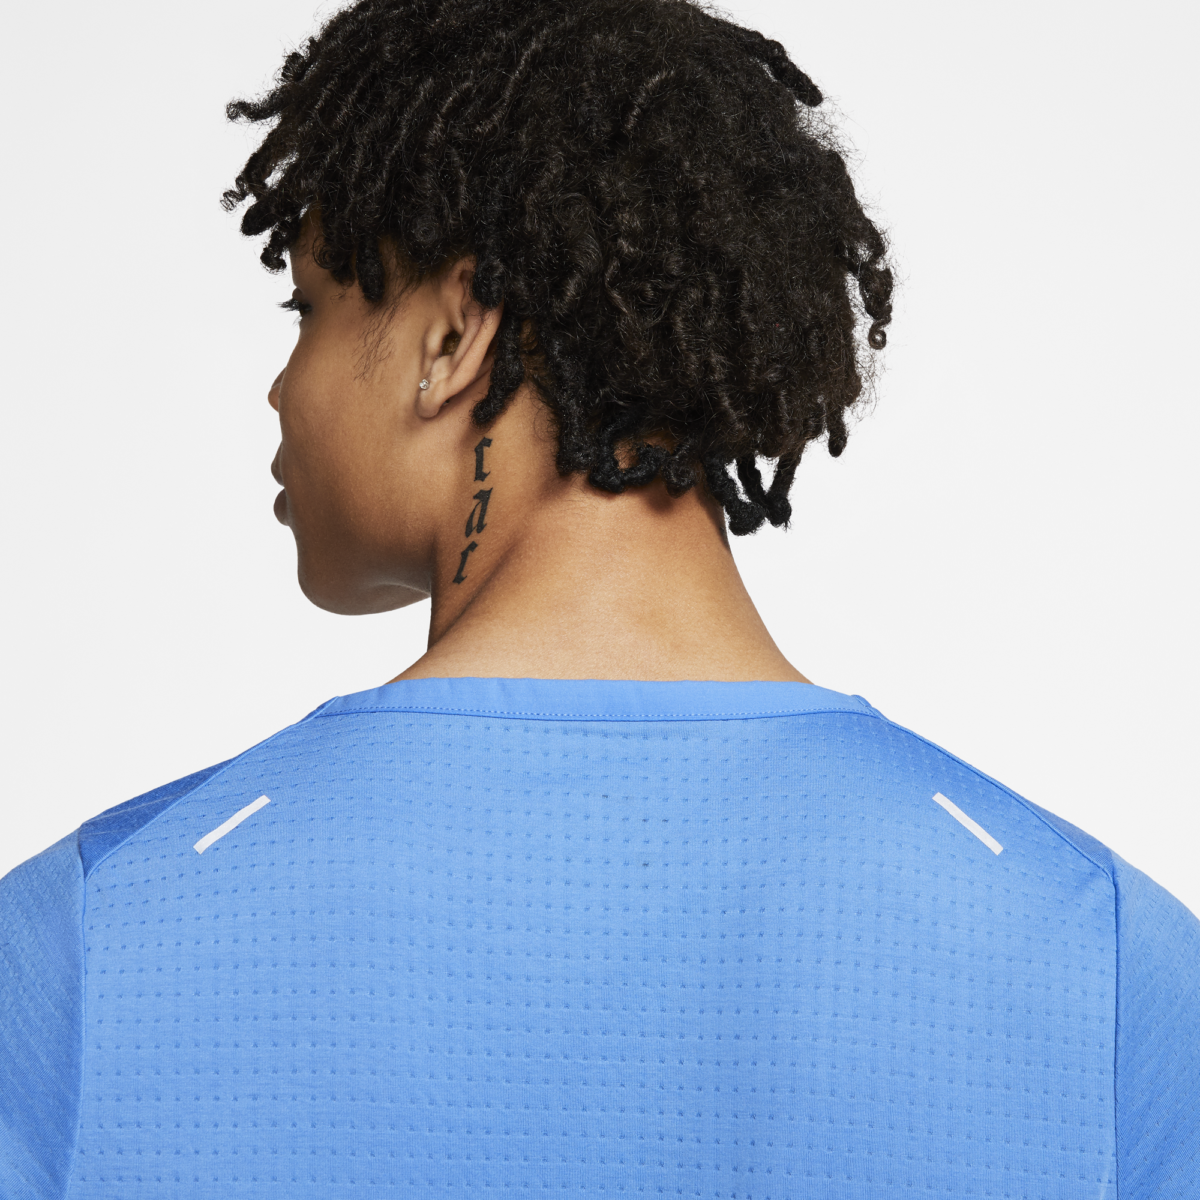 Men's Nike Rise 365 Short Sleeve CJ5420-402